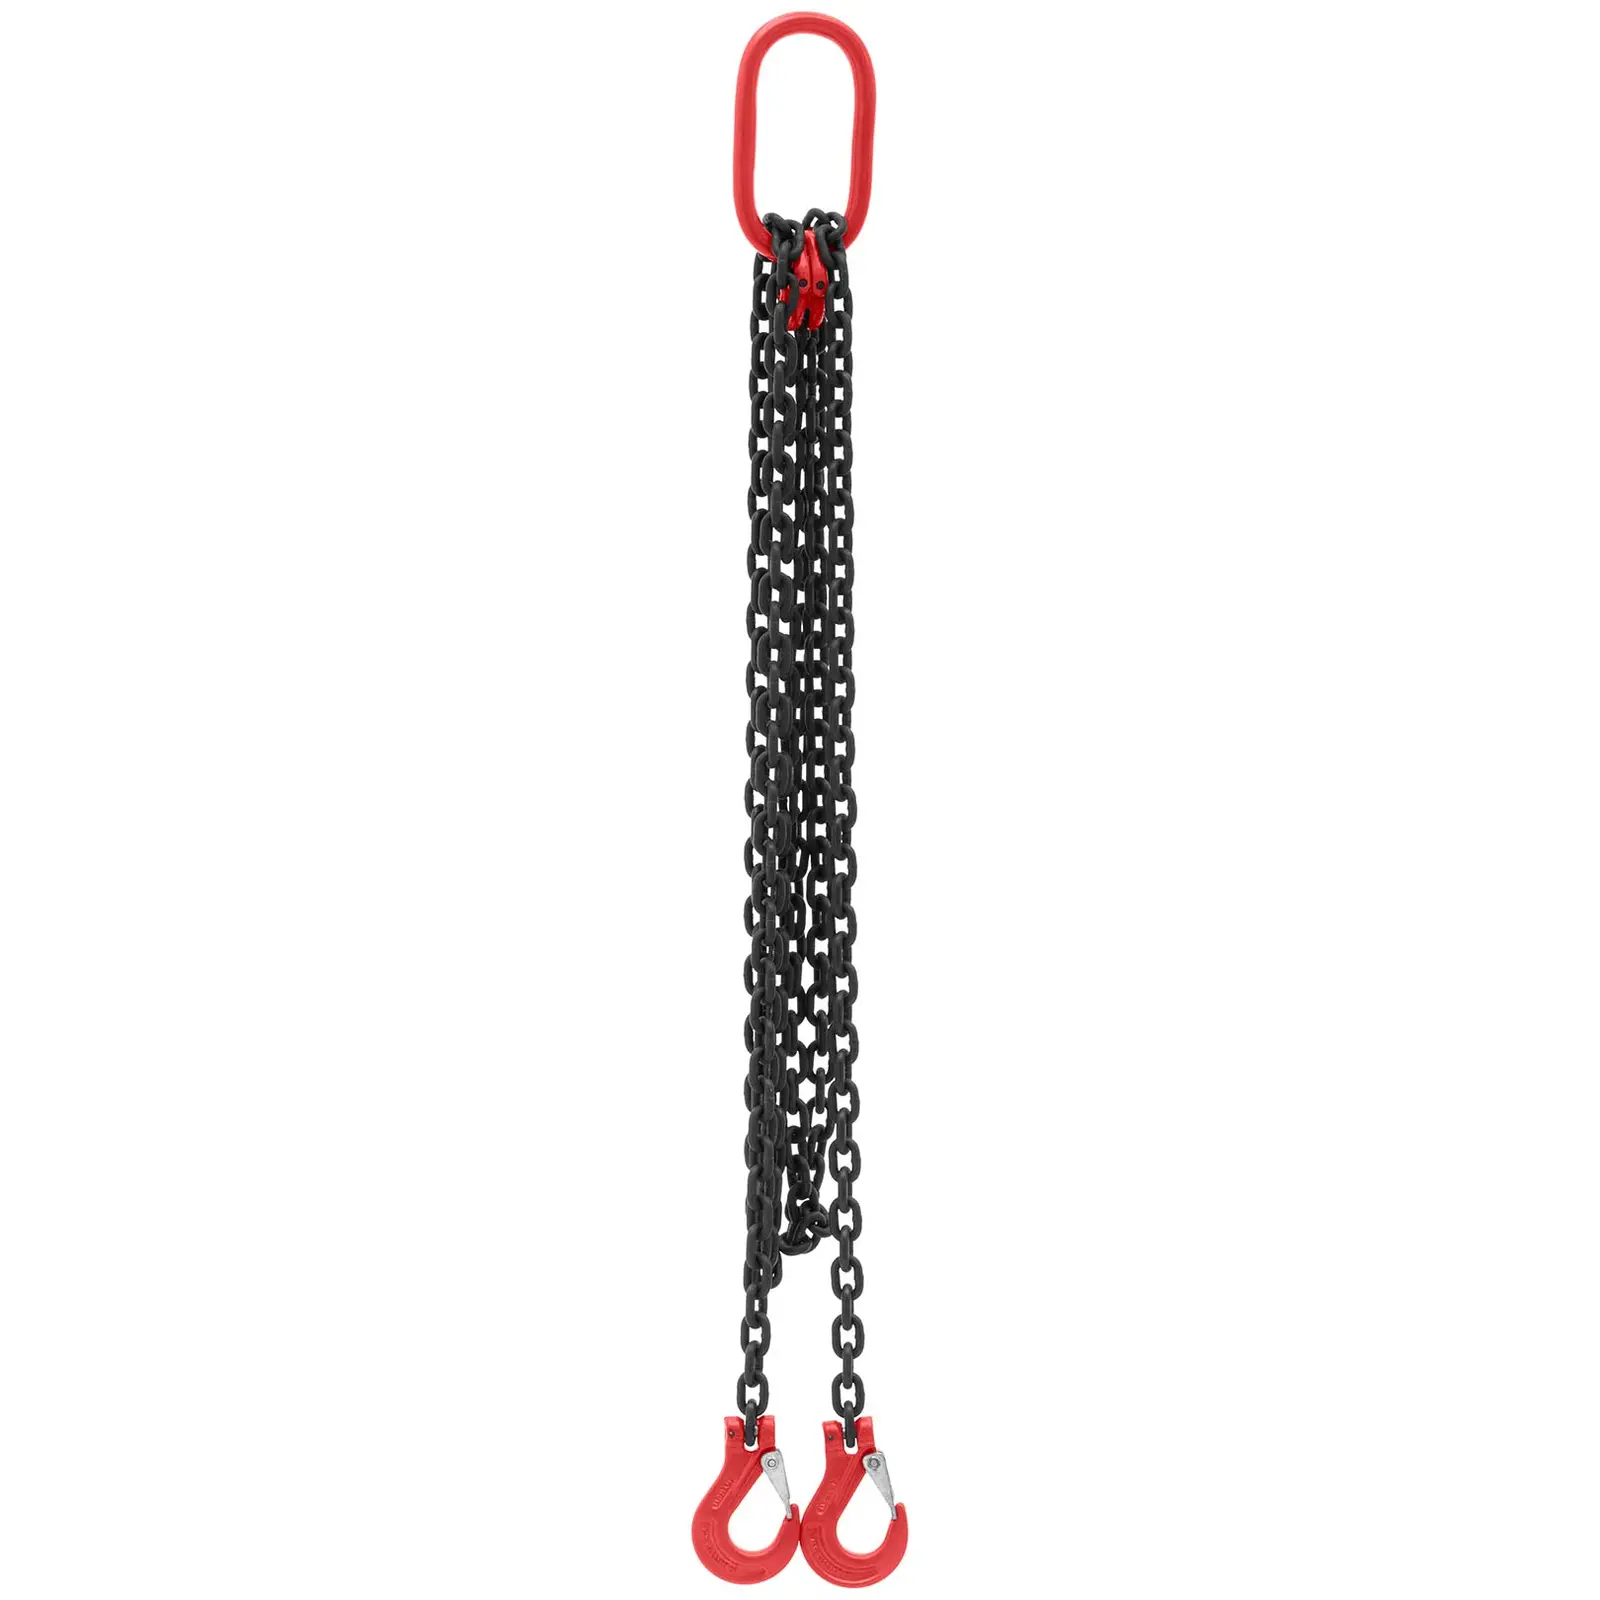 Hijsketting - 1600 kg - 2 x 2 m - zwart/rood